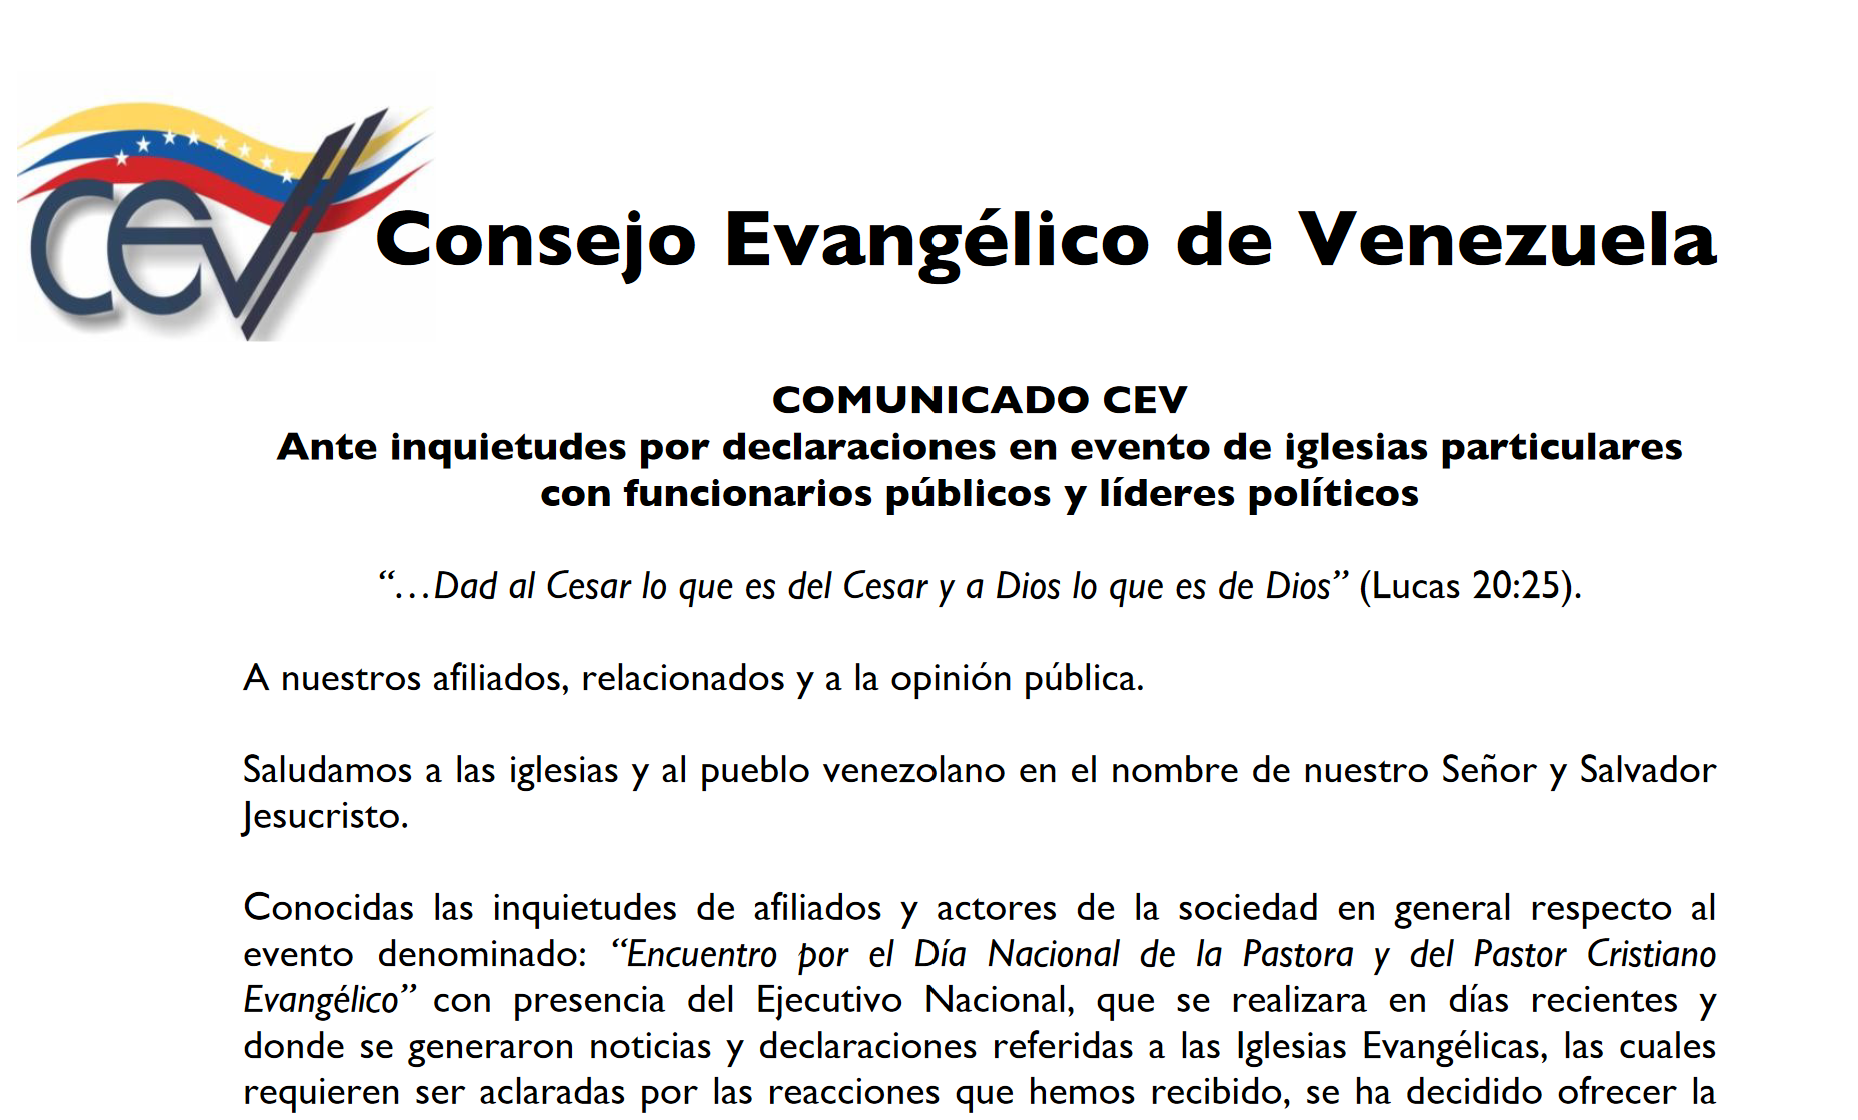 Maduro digs into the division among Venezuelan evangelicals